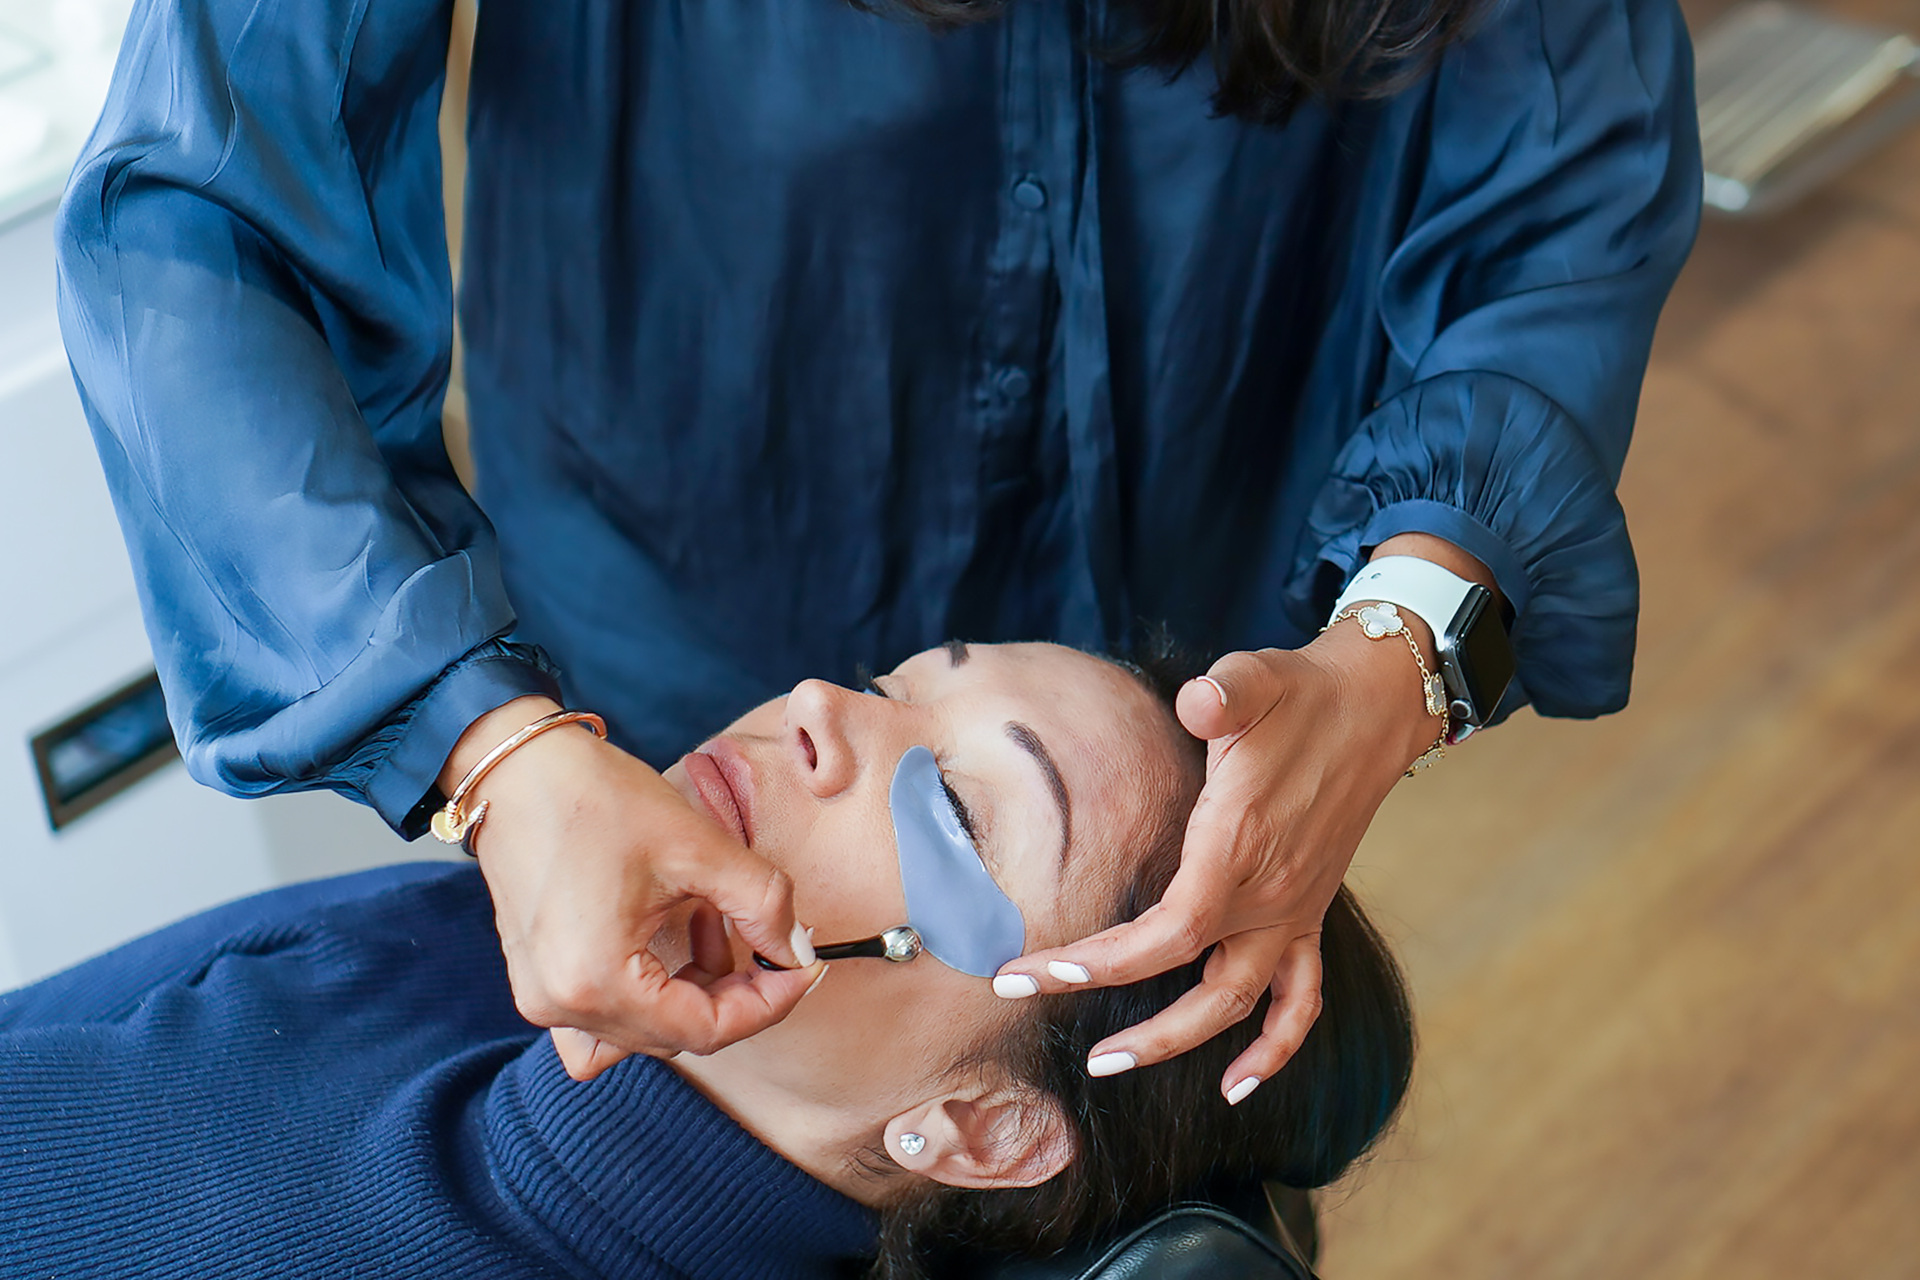 Woman receiving facial treatment